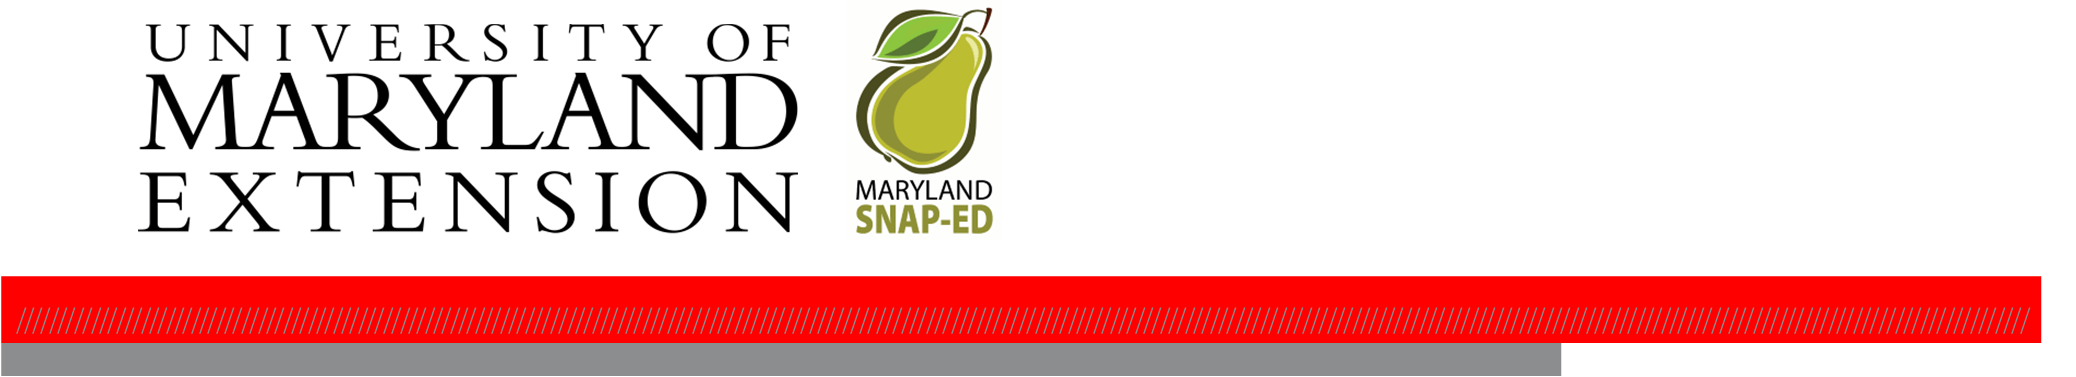 University of Maryland Extension and Maryland SNAP-ED logo